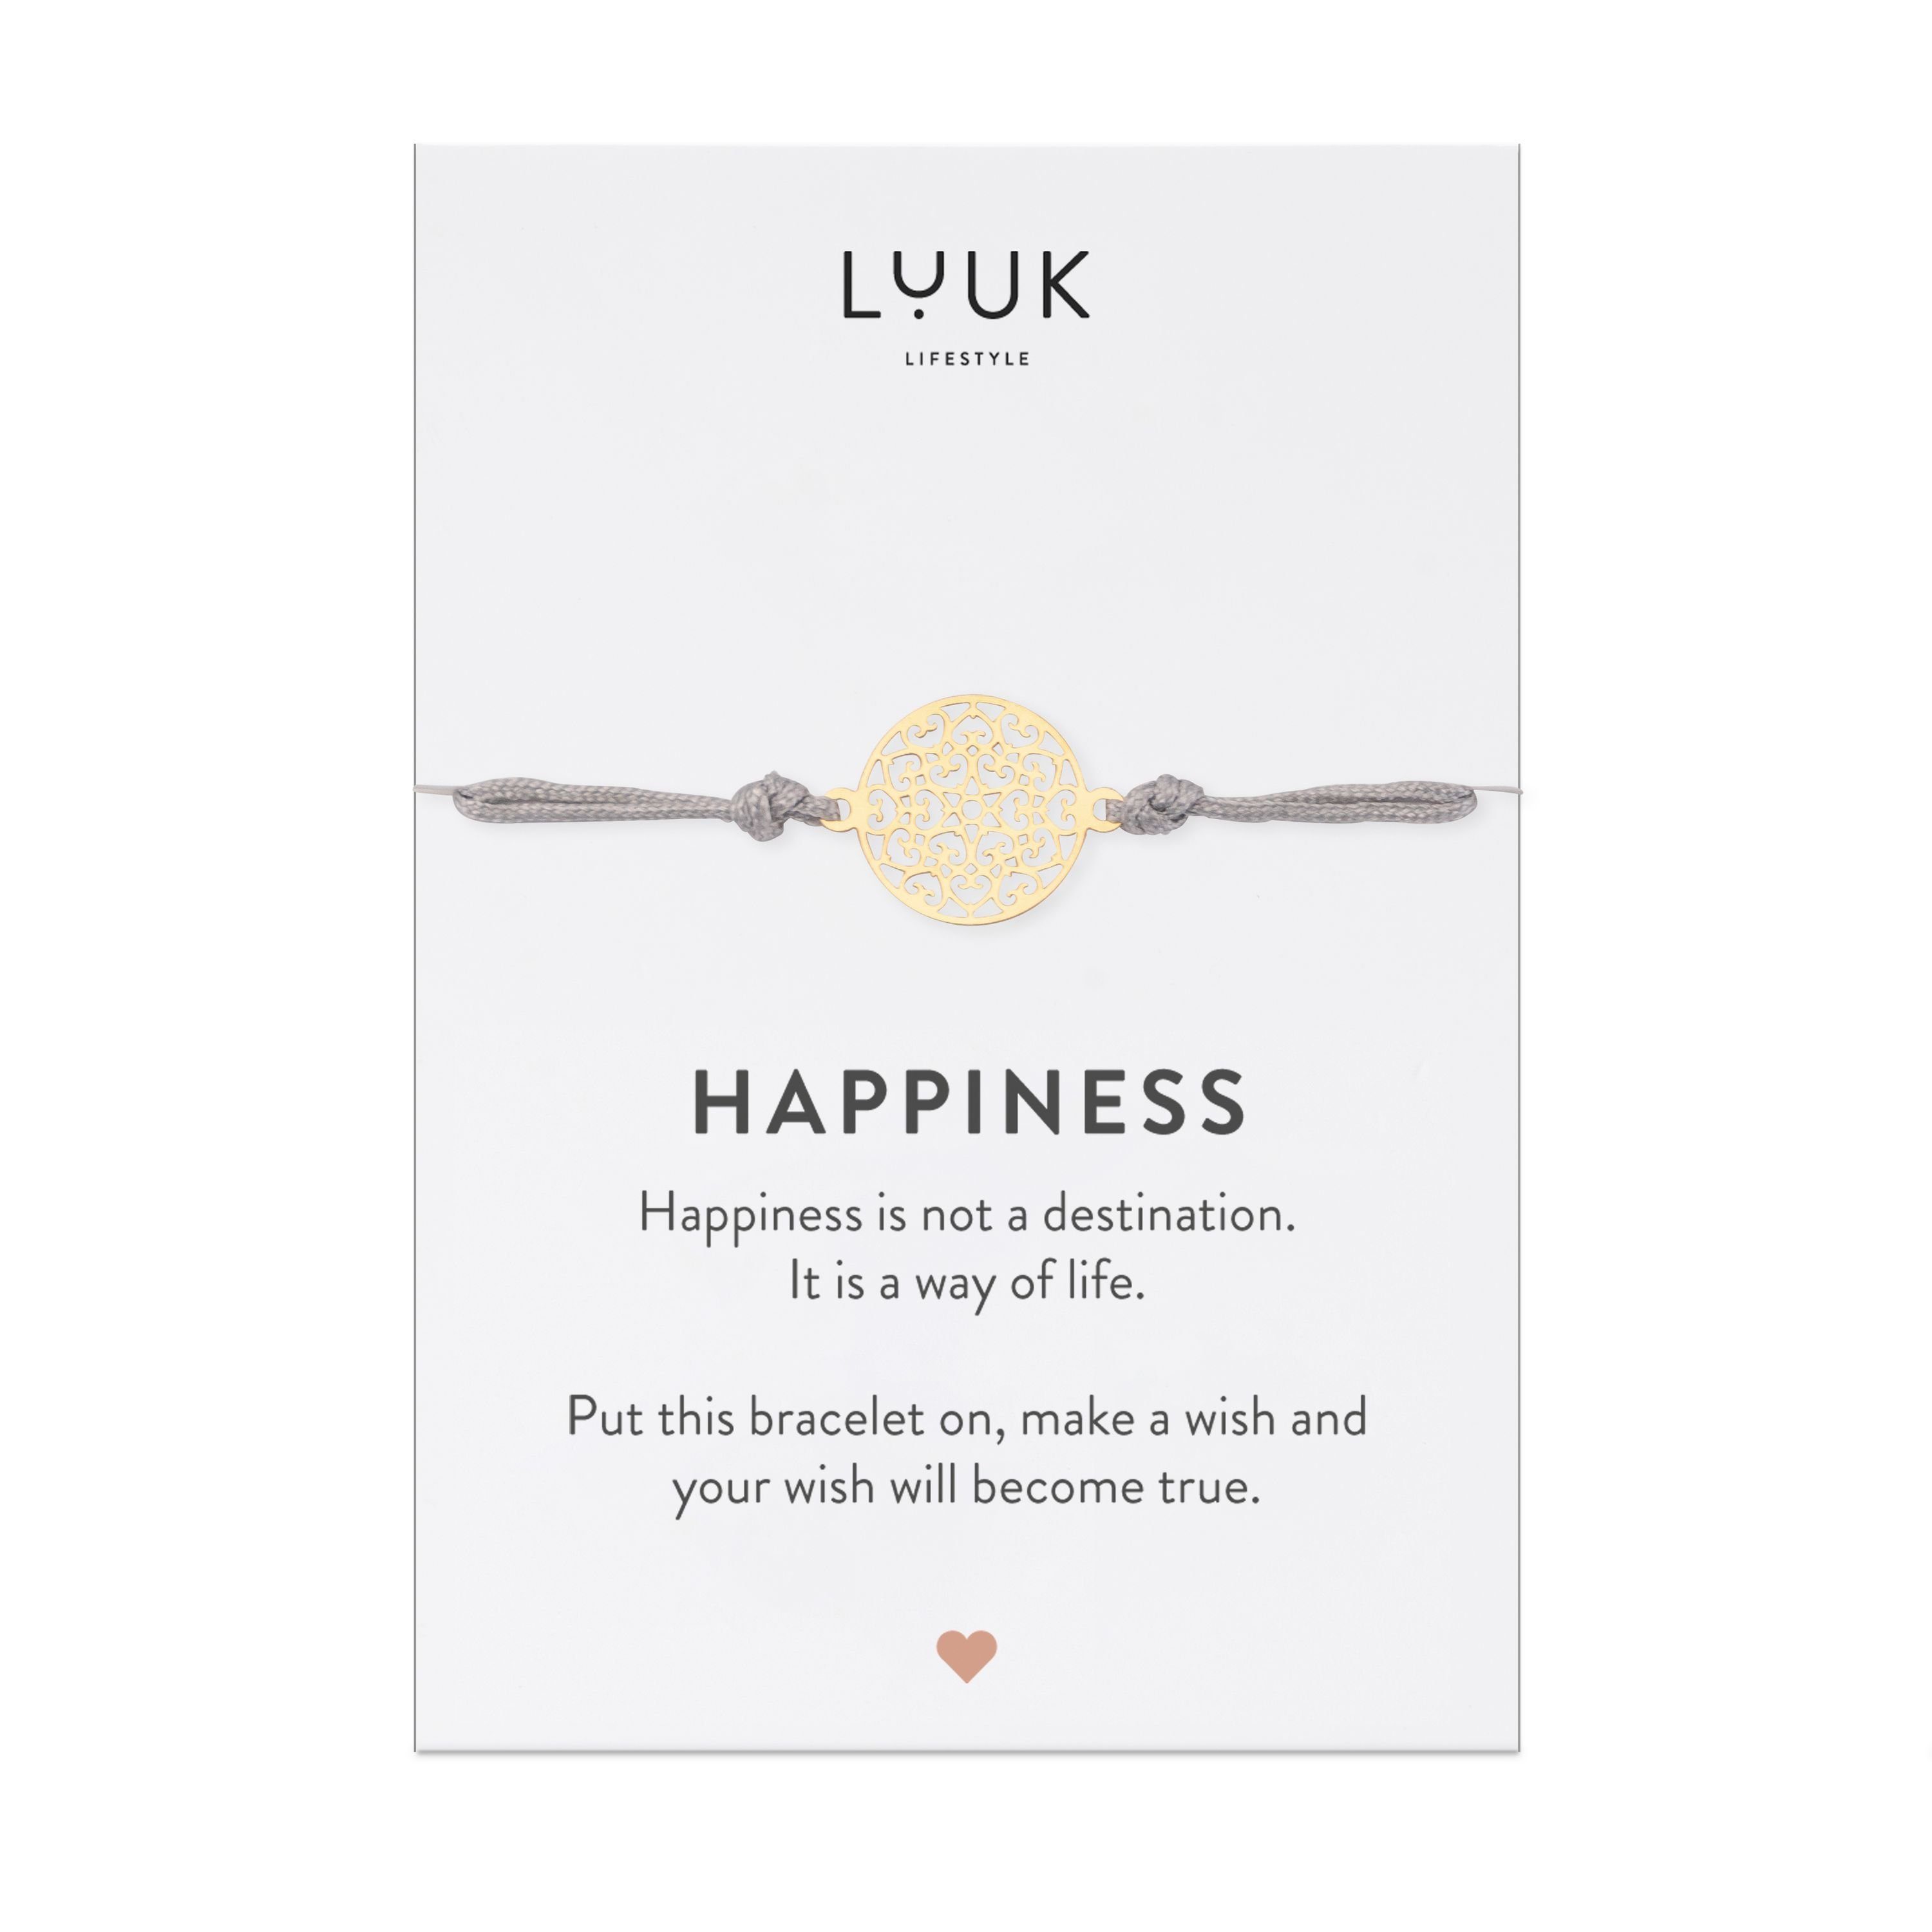 LUUK LIFESTYLE Freundschaftsarmband Lebensblume, handmade, Happiness Gold mit Spruchkarte